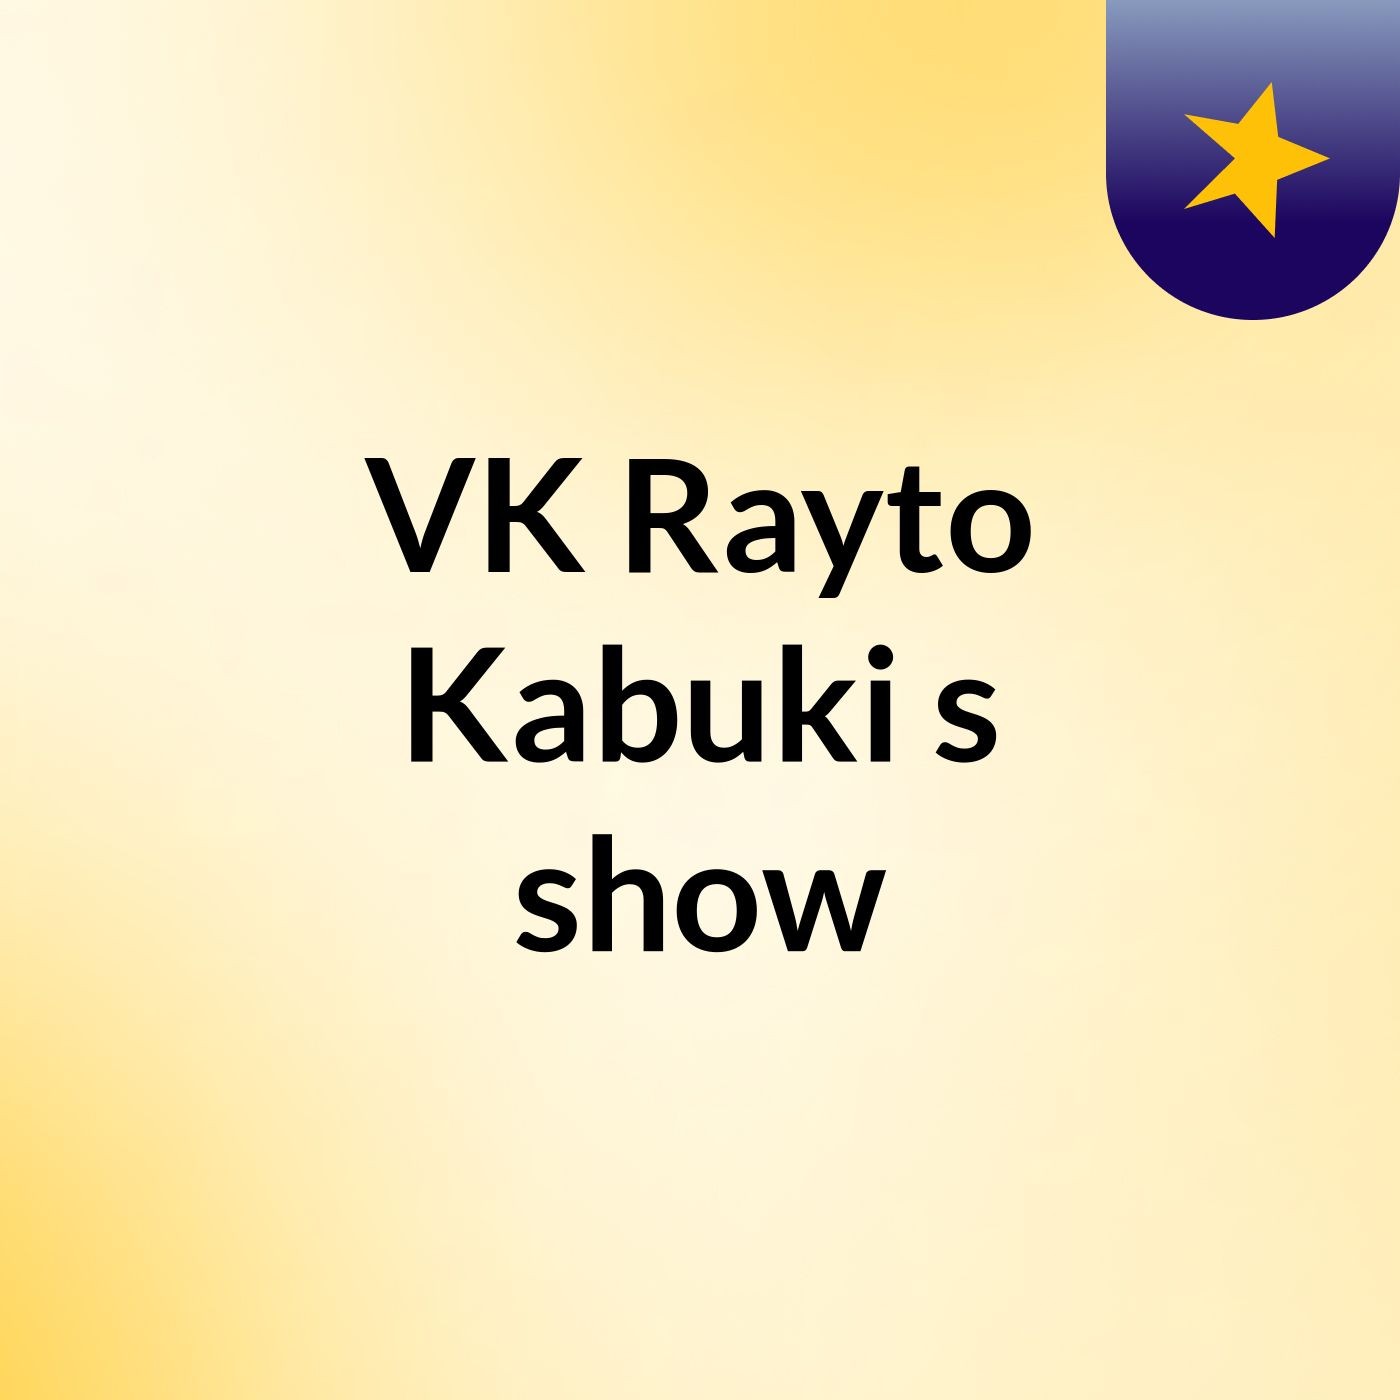 VK Rayto Kabuki's show